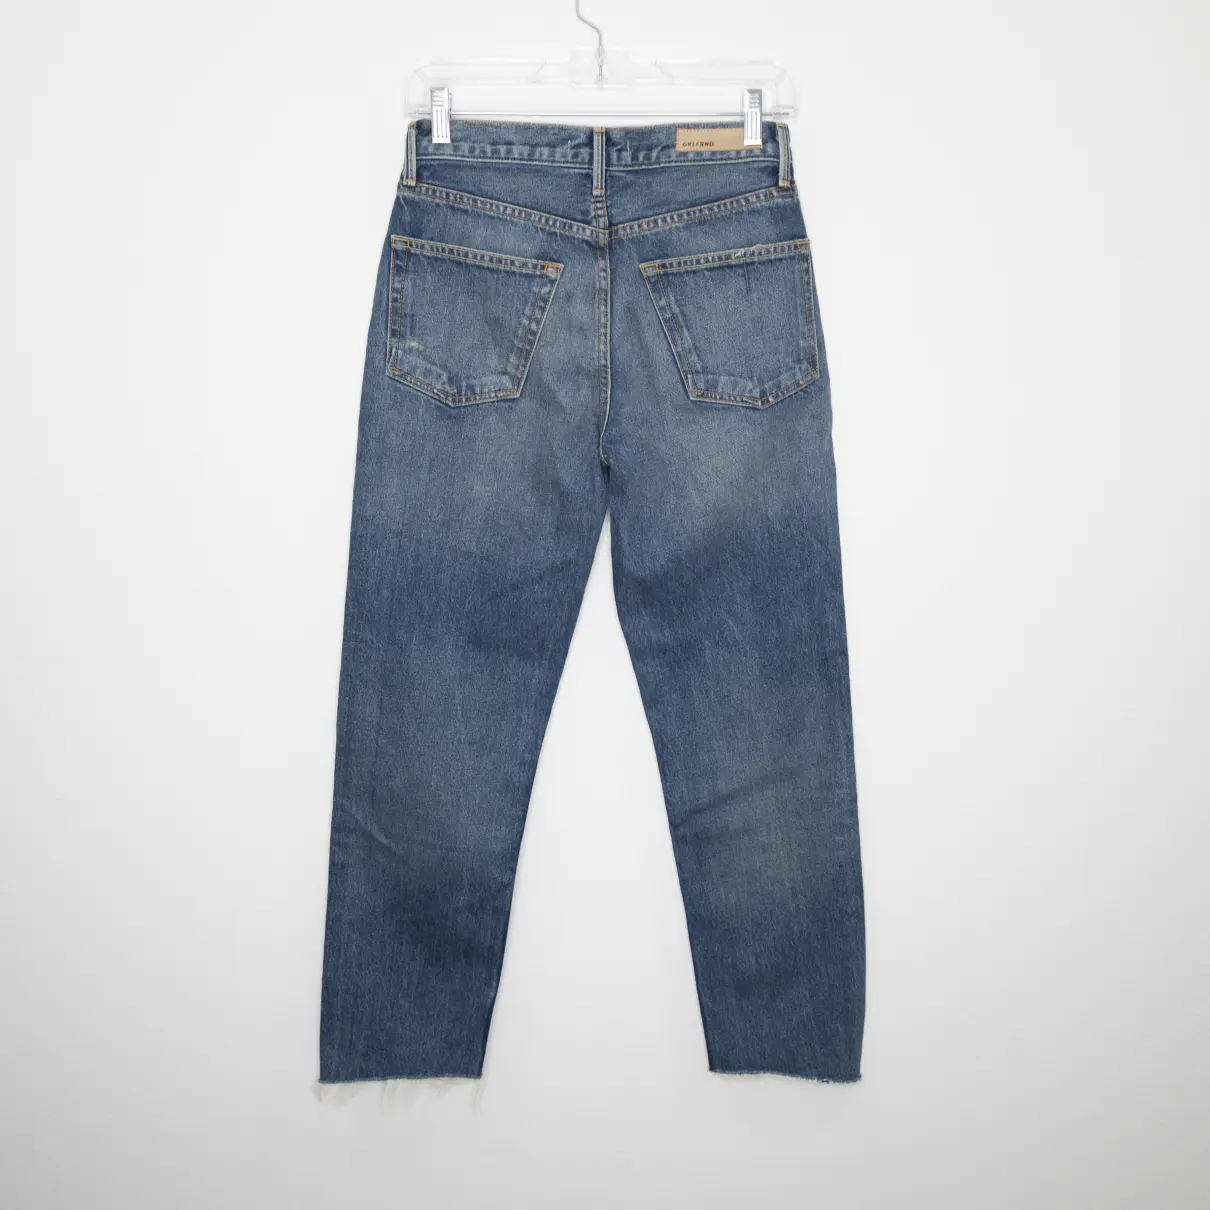 Buy Grlfrnd Straight jeans online